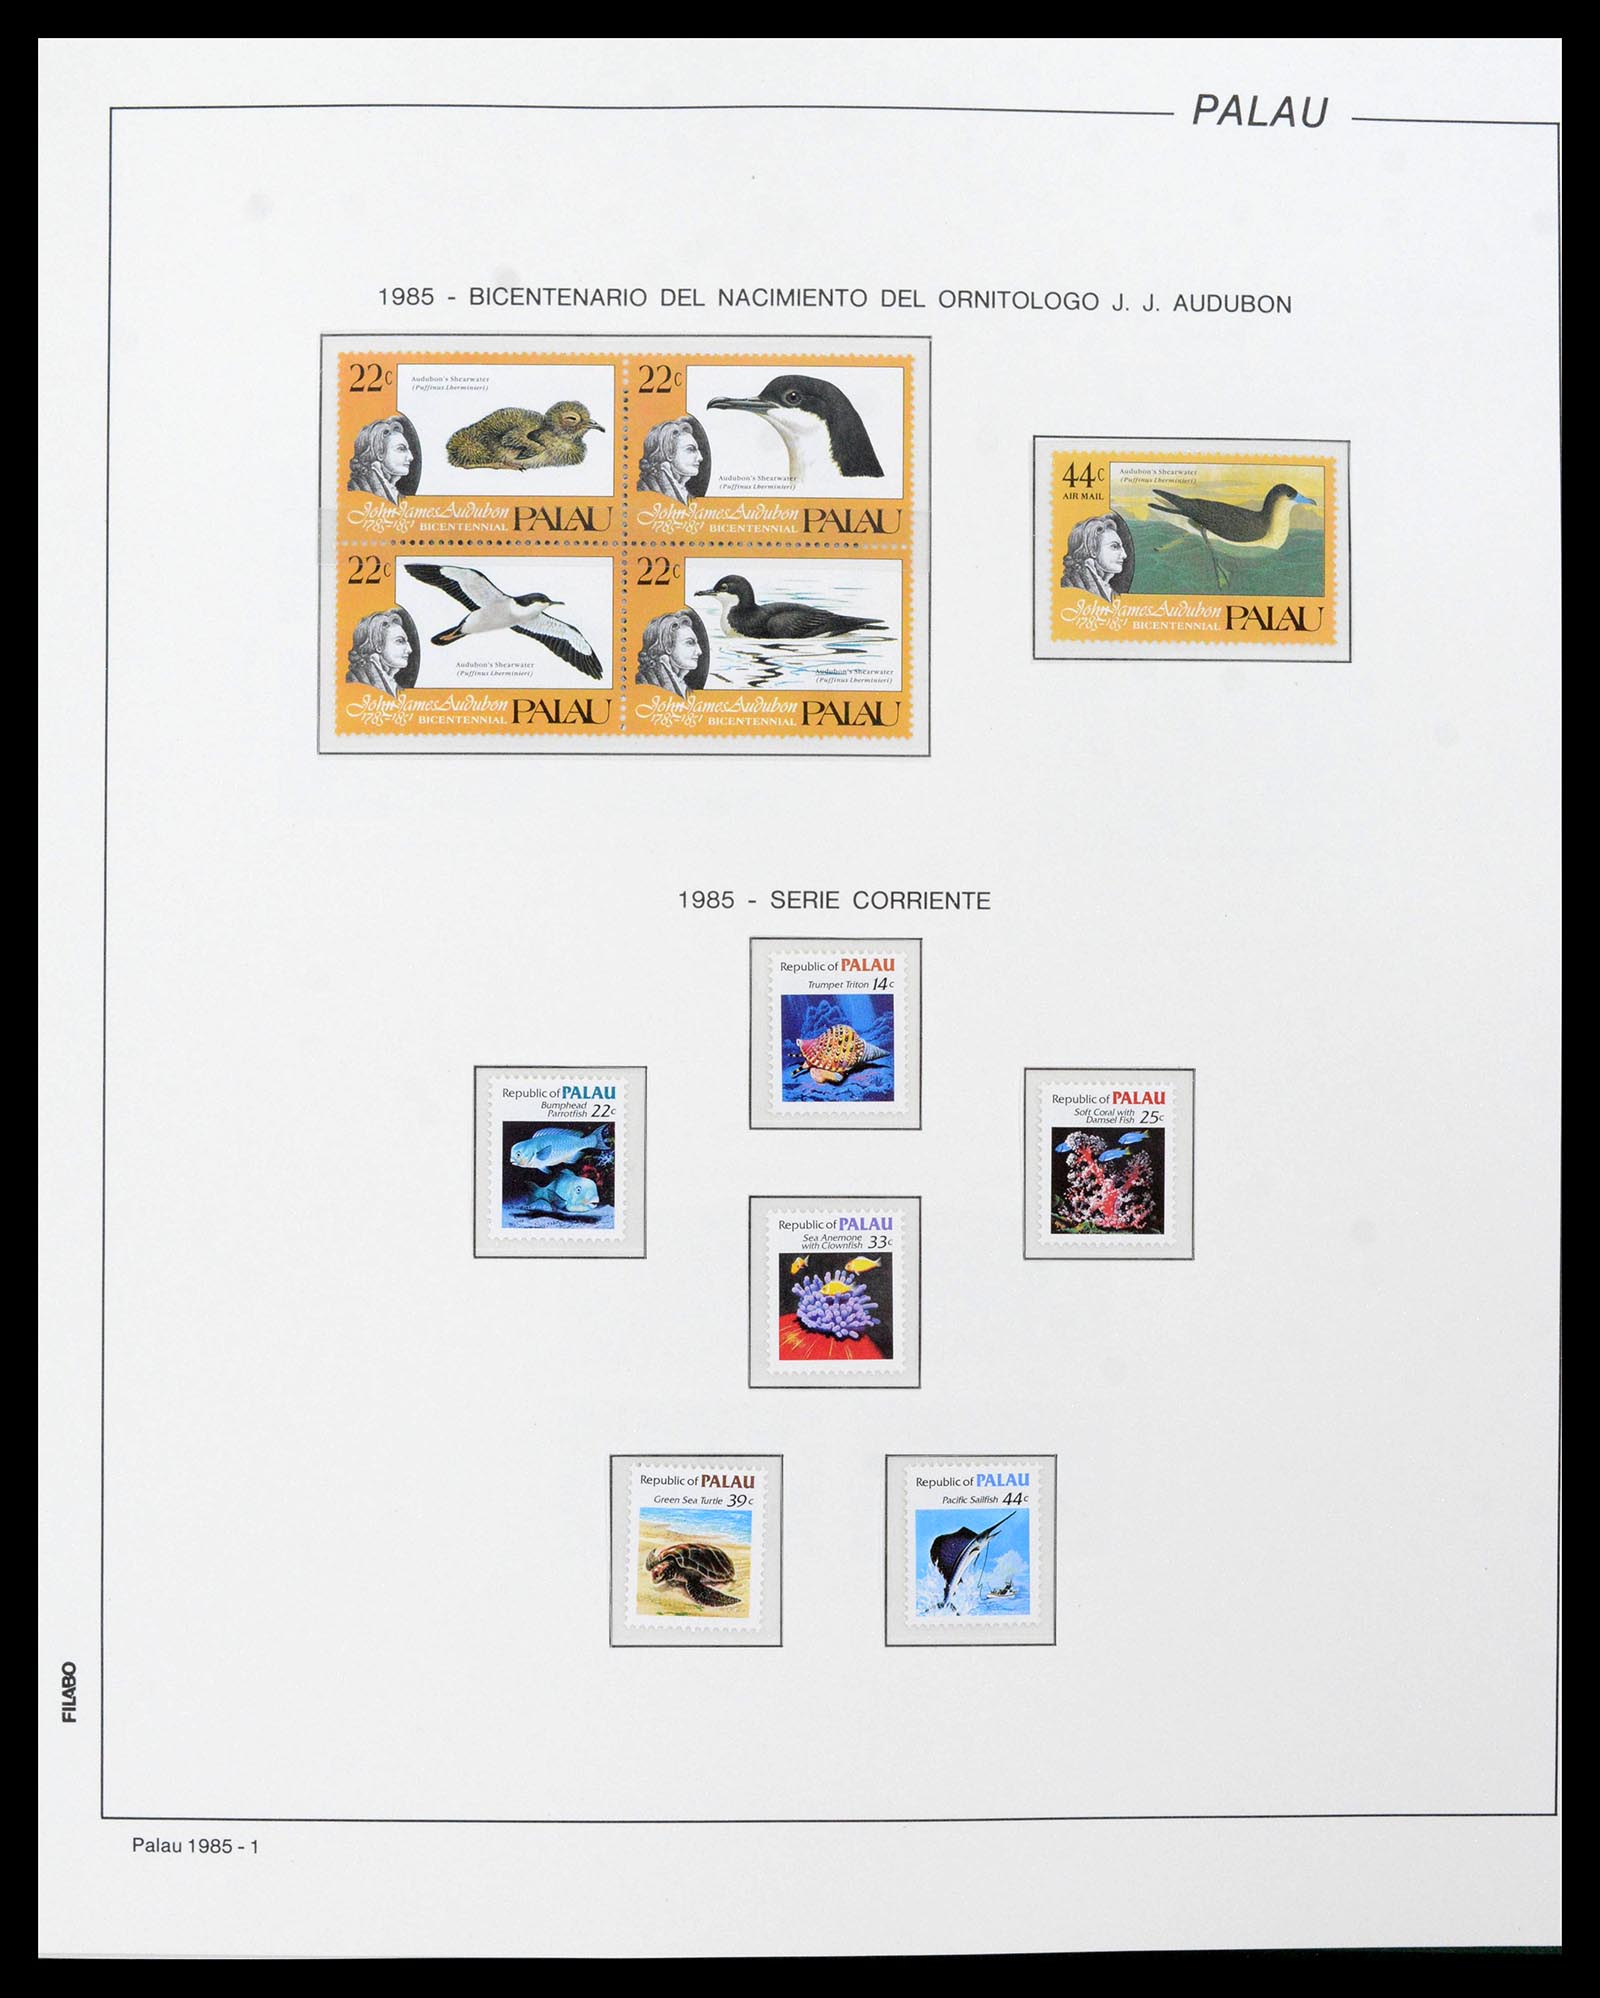 39222 0006 - Stamp collection 39222 Palau, Micronesia and Marshall islands 1980-1995.